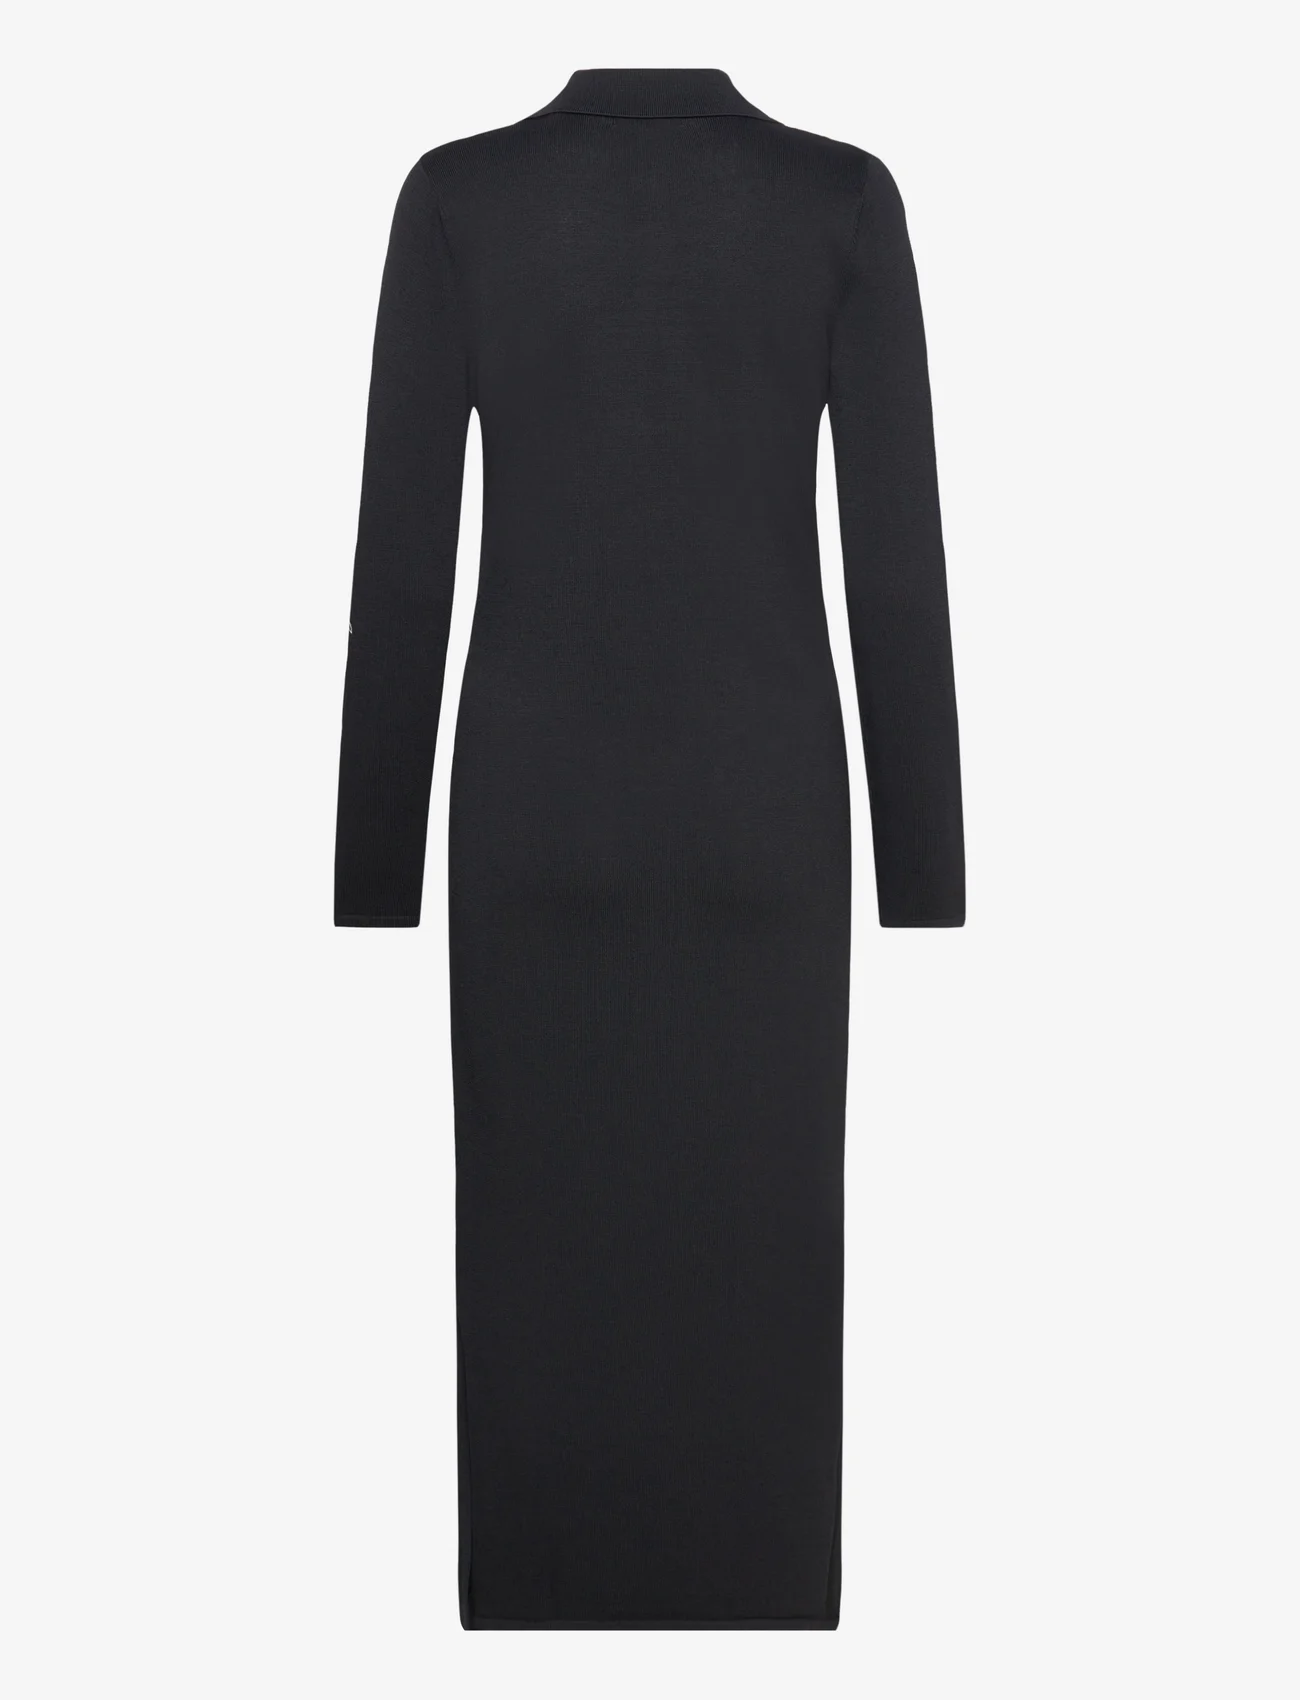 Armani Exchange - DRESS - stickade klänningar - 1200-black - 1